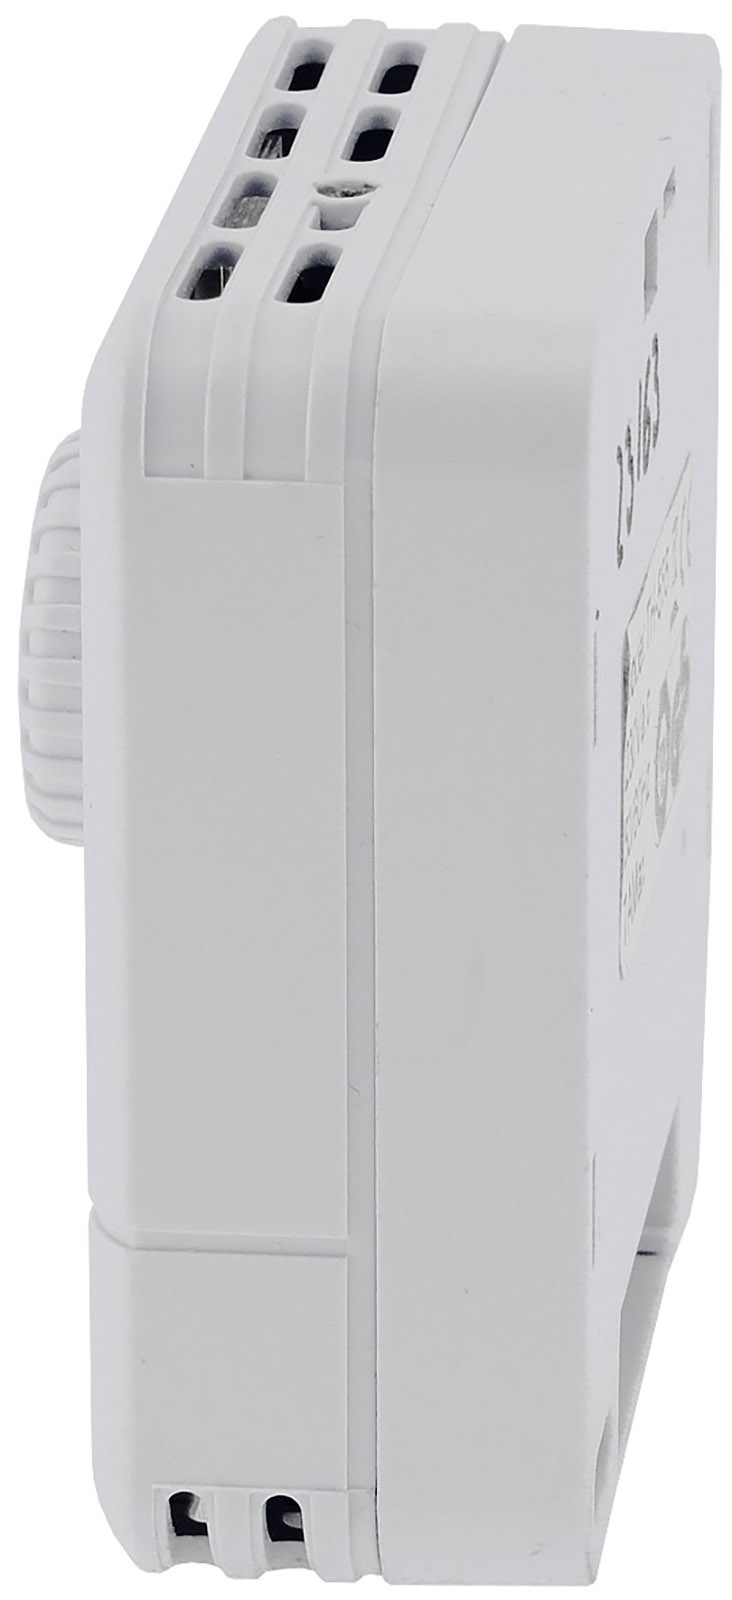 Thermostat 7A 230V Raumtemperatur-Regler Aufputz Raumthermostat LED-Display 